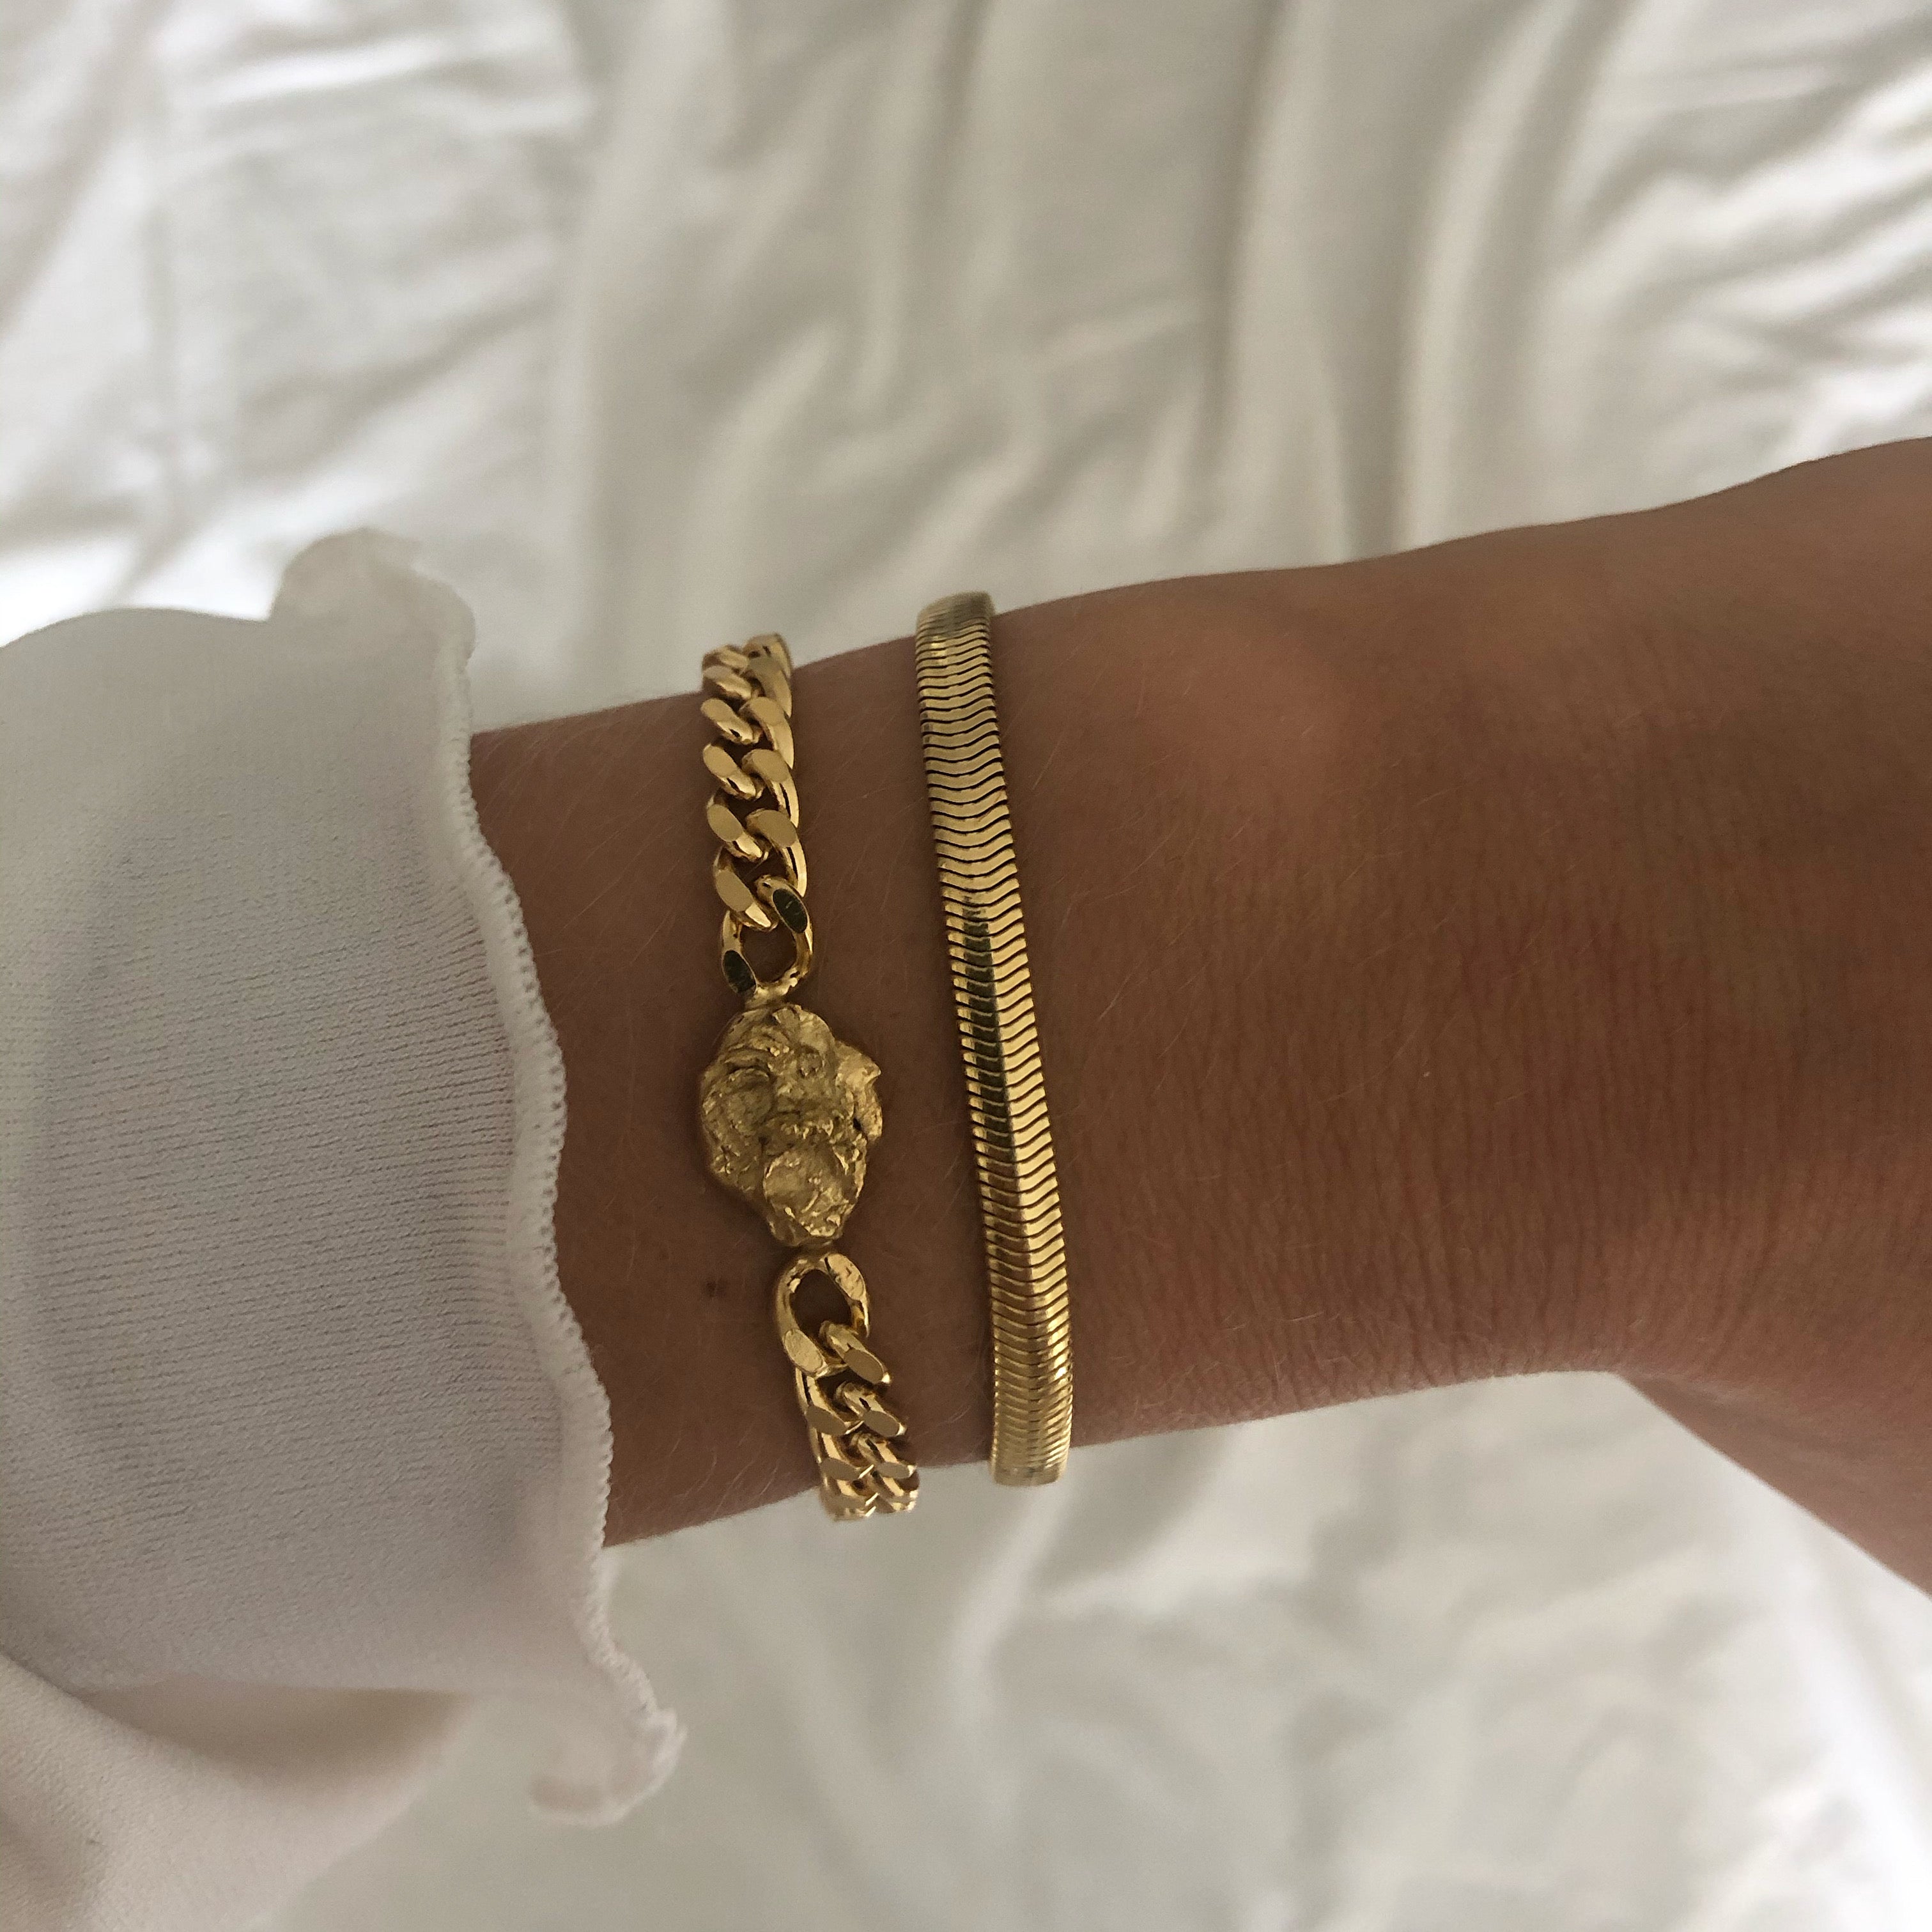 Moon bracelet gold-plated